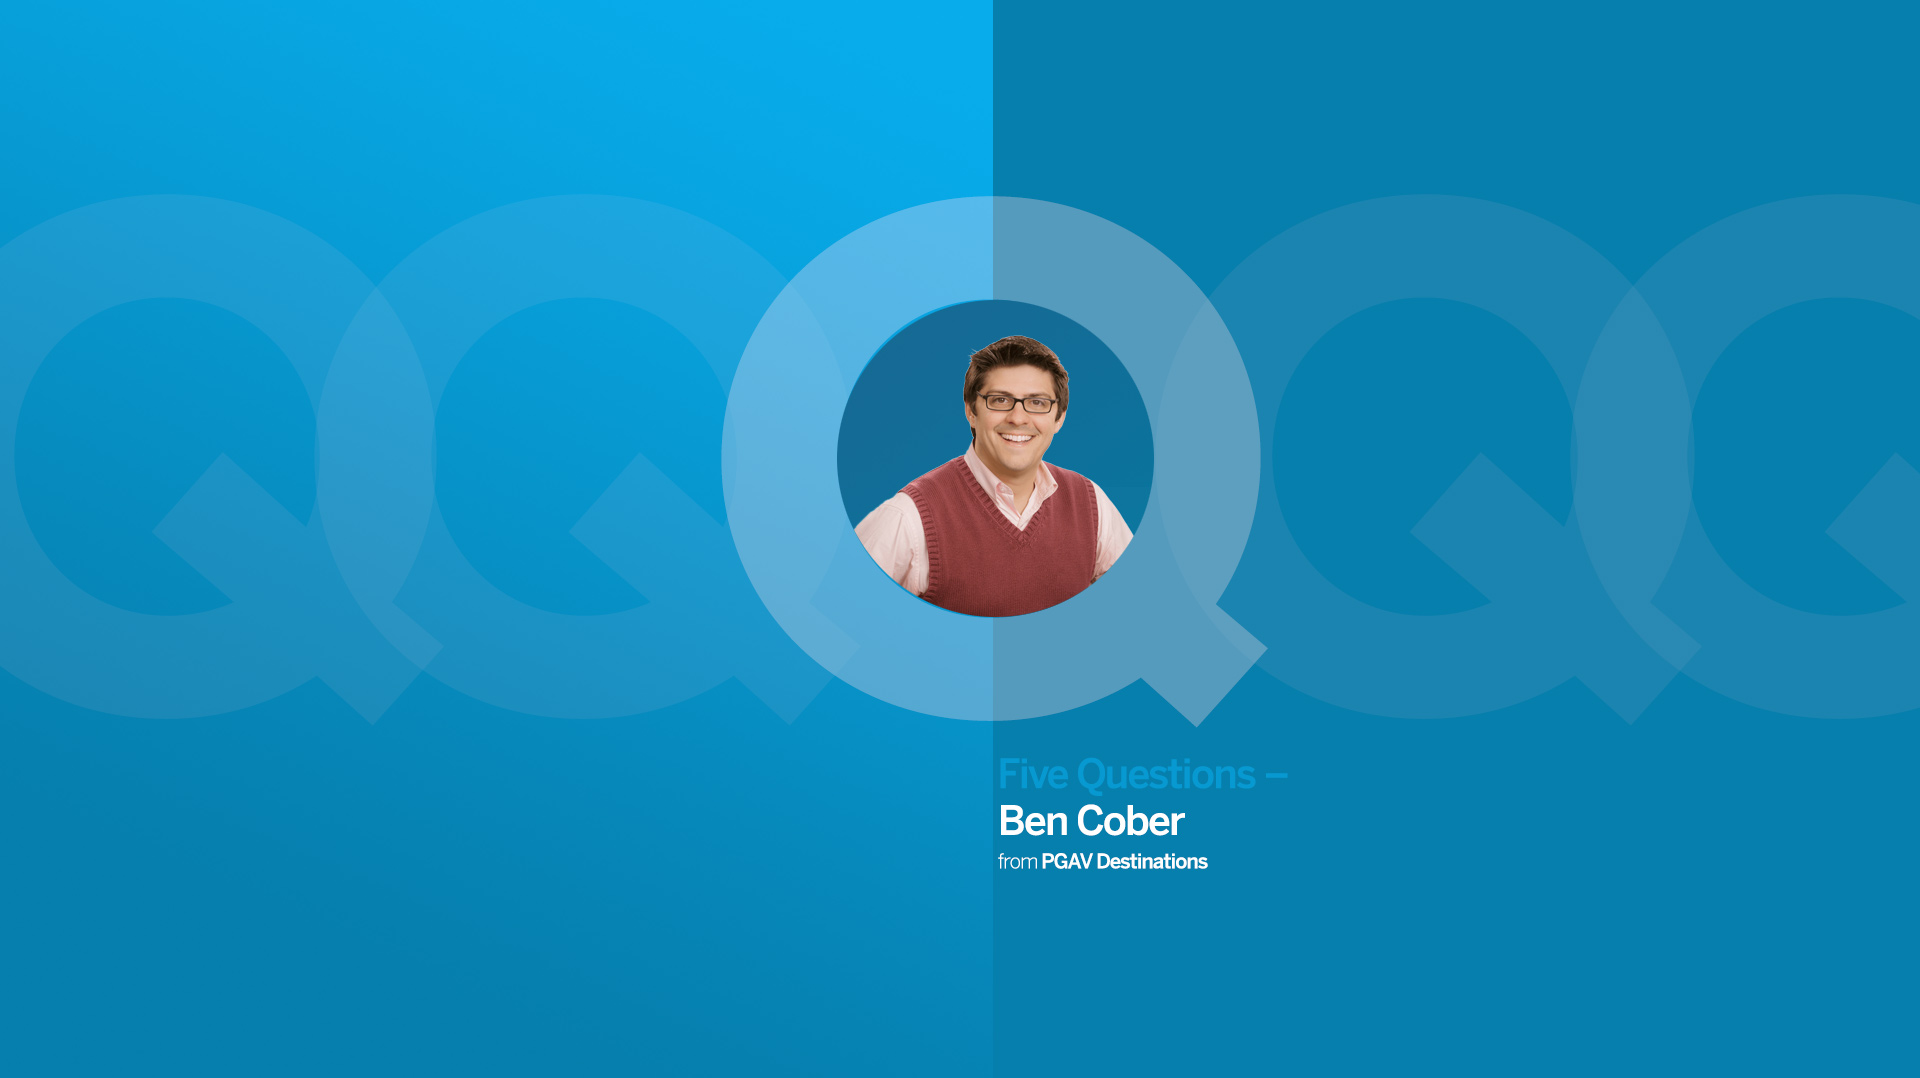 Five Questions with Ben Cober